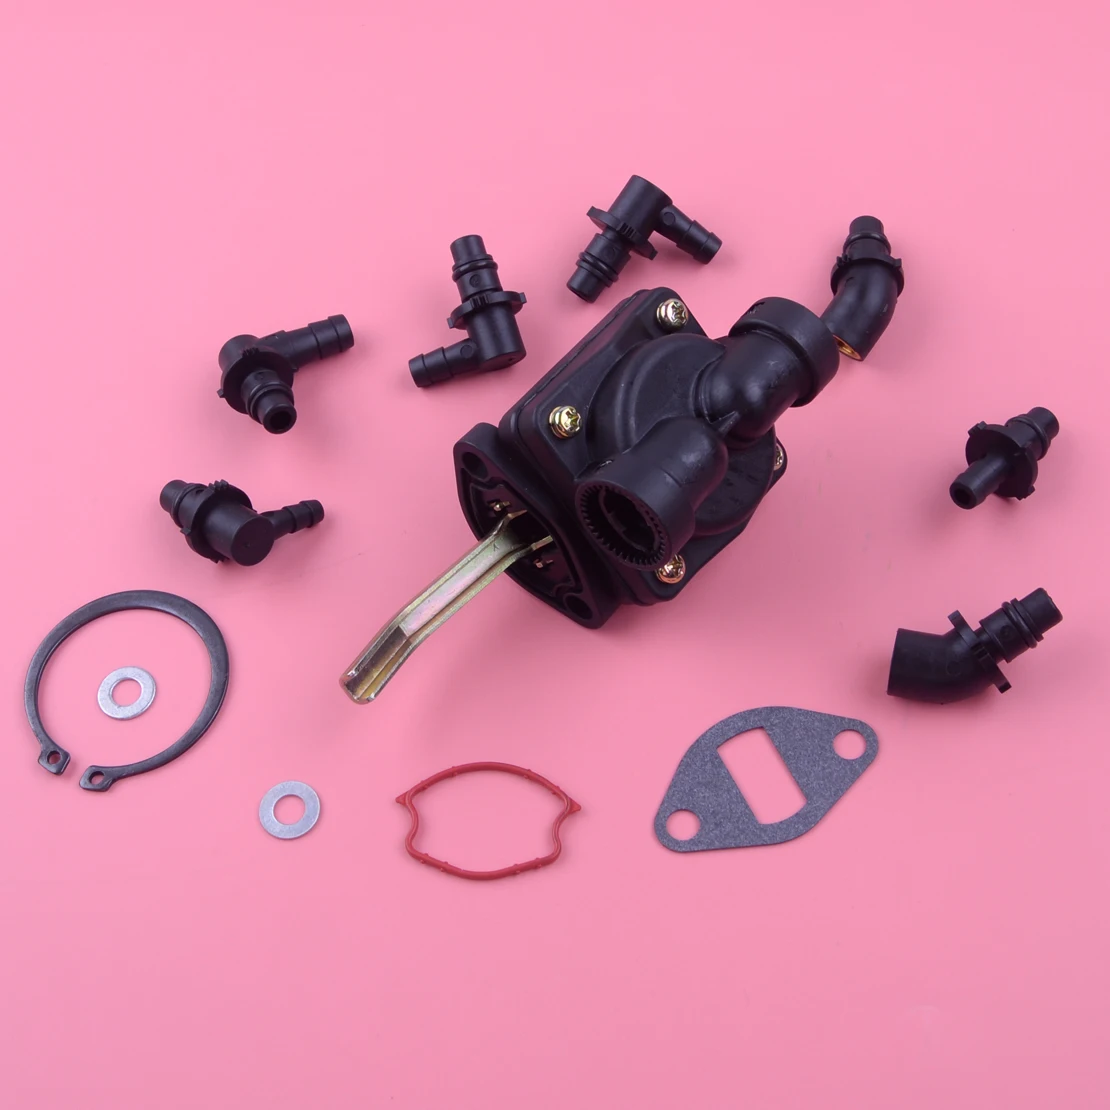 

LETAOSK Fuel Pump Kit Replace Fit For Kohler K141 K161 K181 M8 41 559 05-S A231796-S C-230361-S 41 393 09-S Accessories